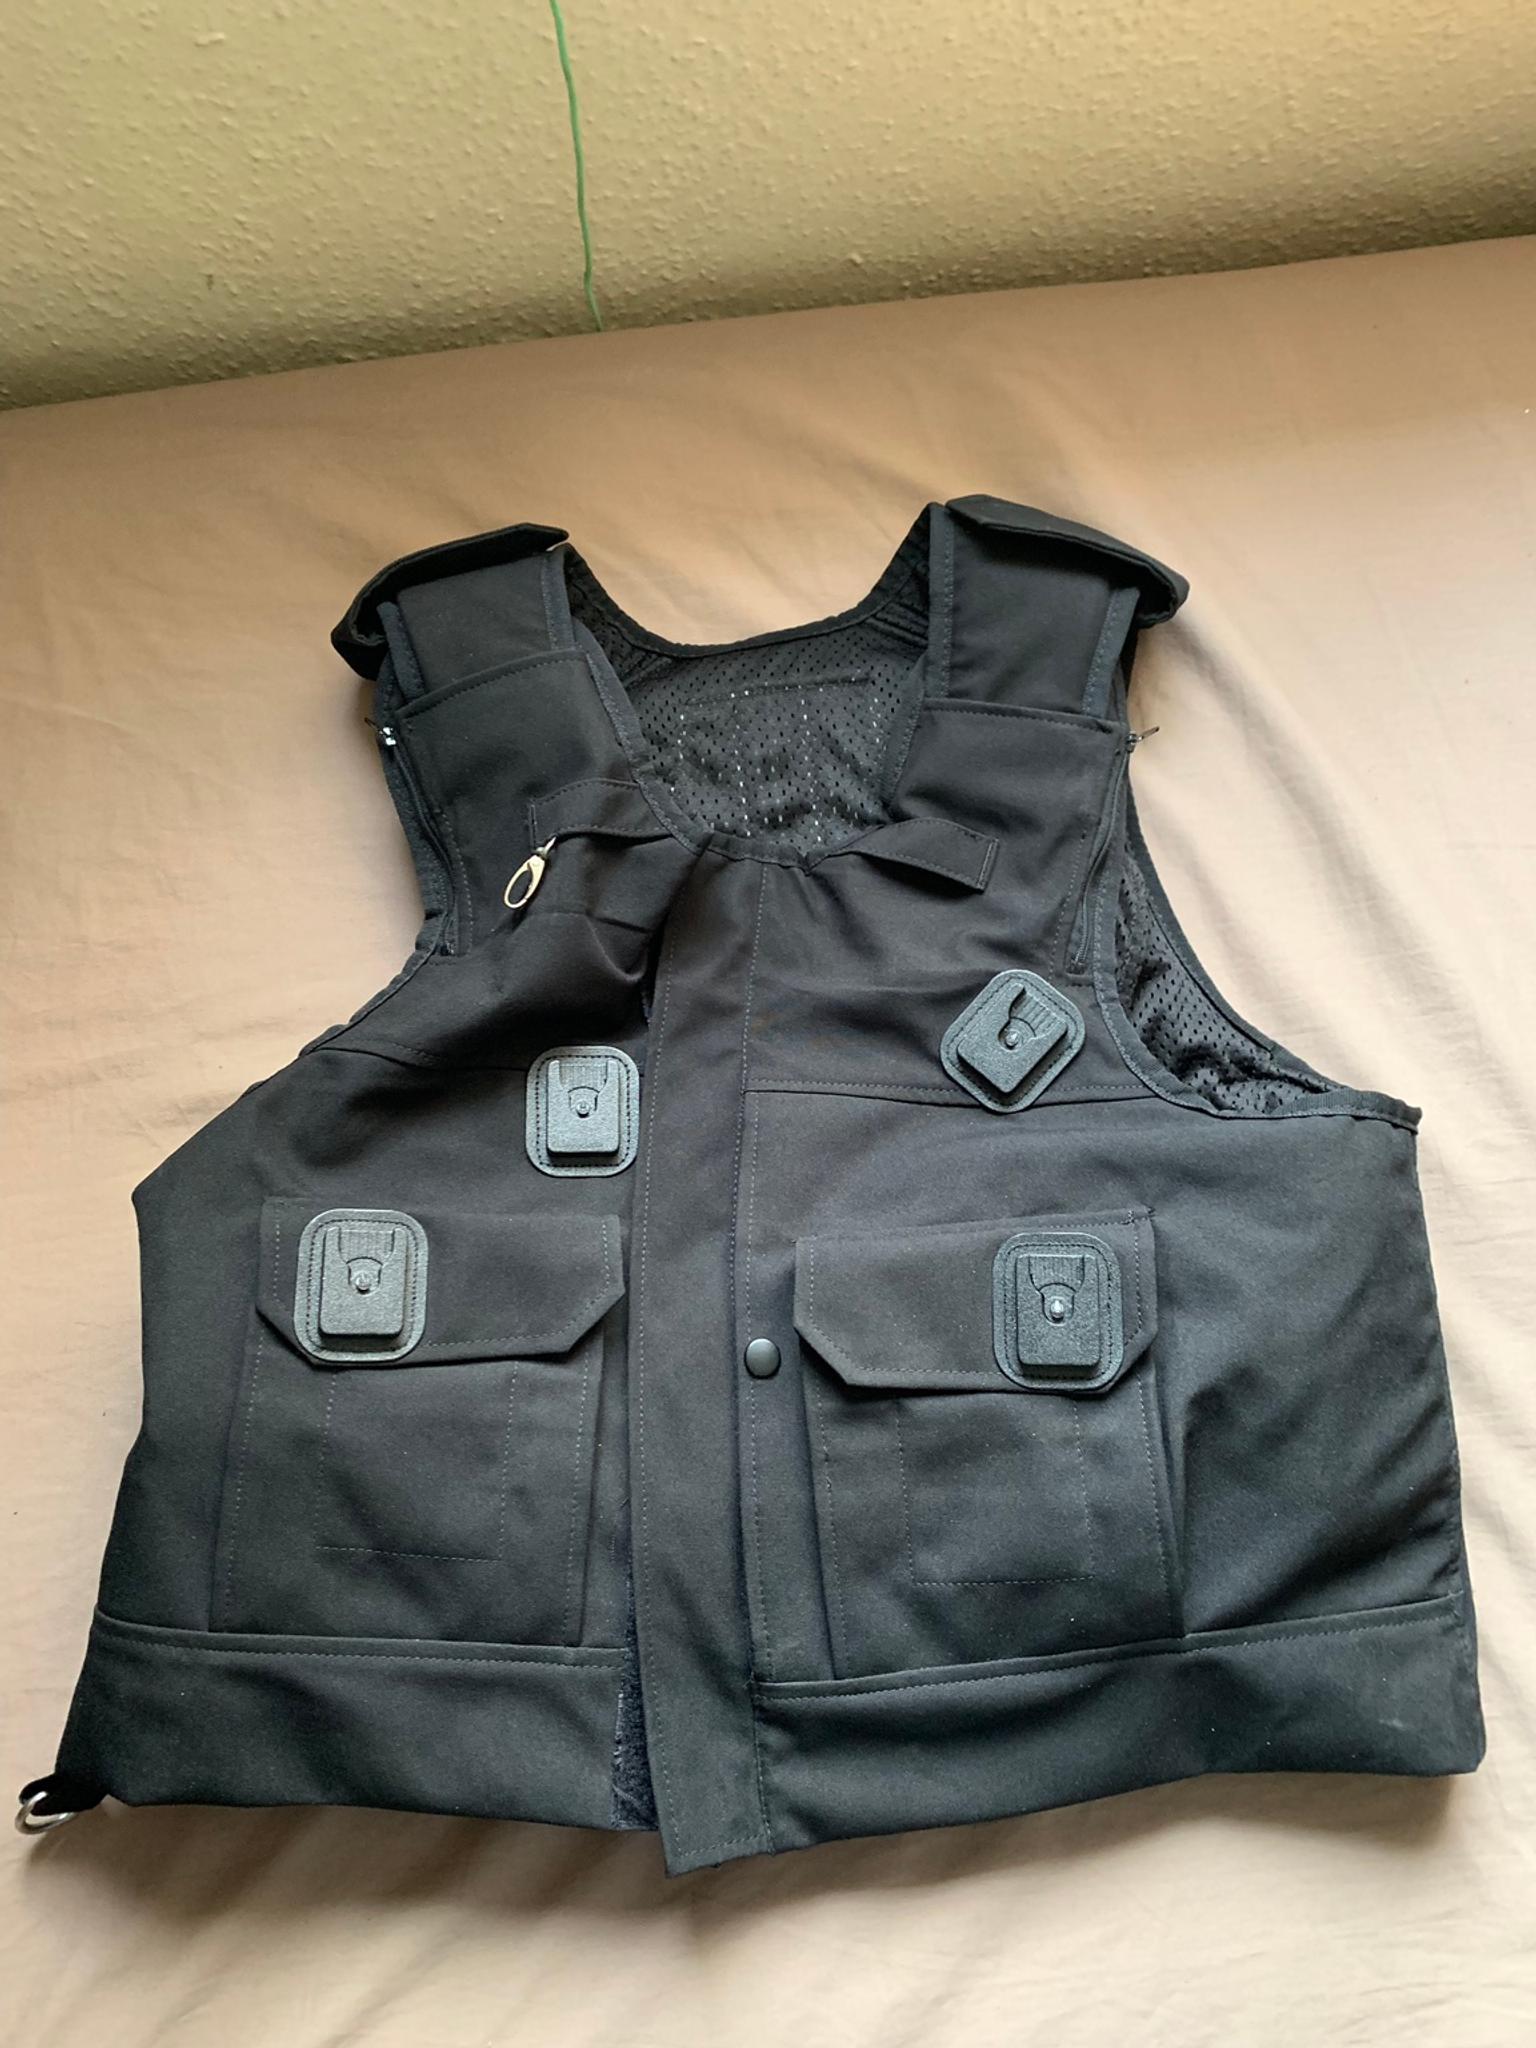 Ex Police Molle Aegis Firearms Vest Large Short